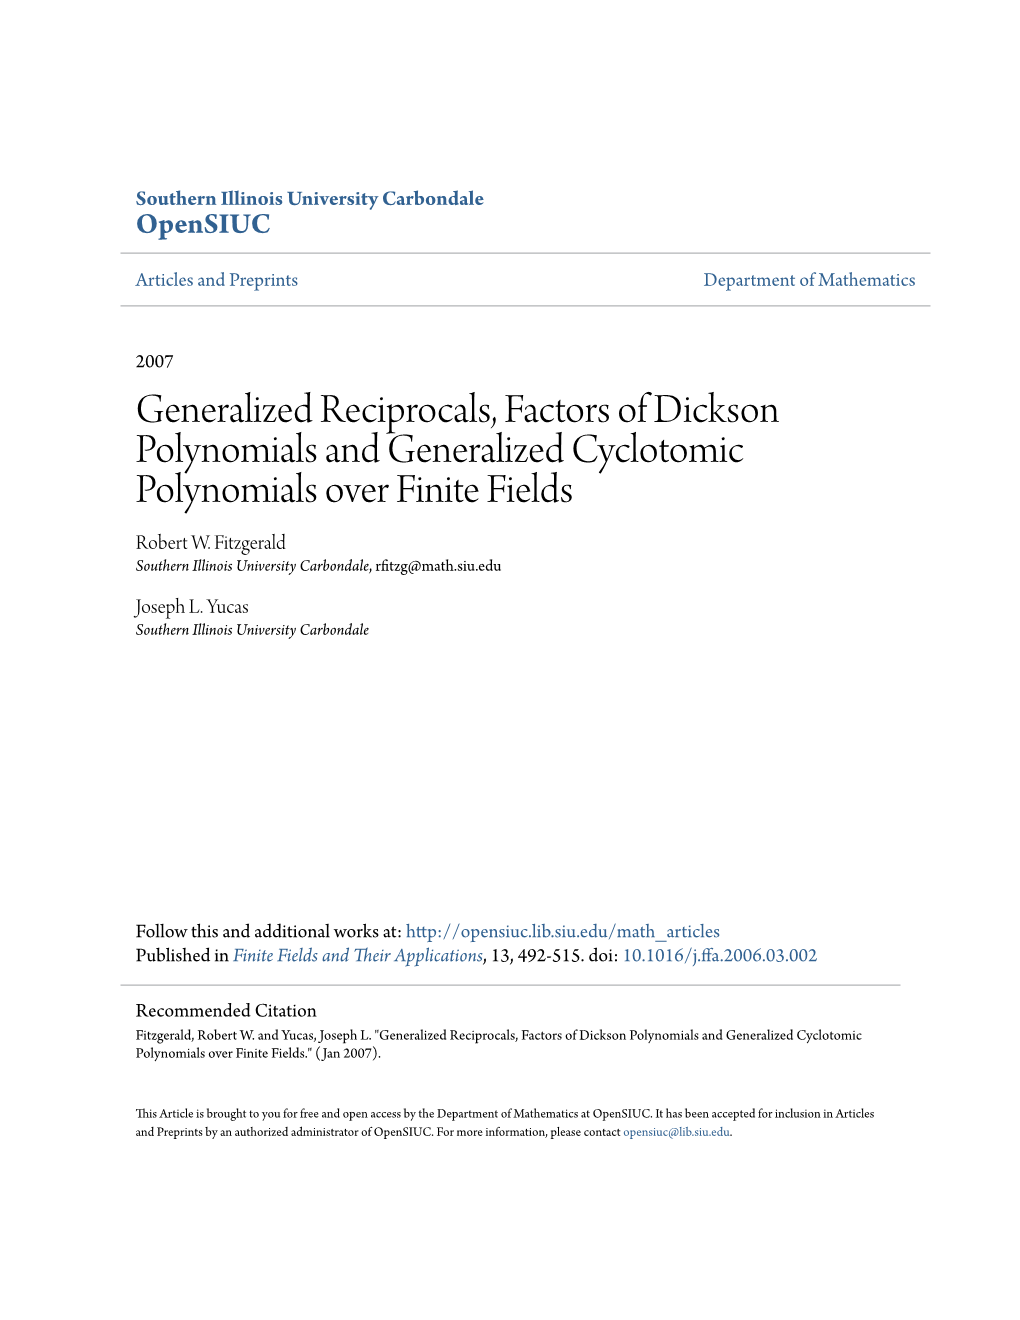 Generalized Reciprocals, Factors of Dickson Polynomials and Generalized Cyclotomic Polynomials Over Finite Fields Robert W